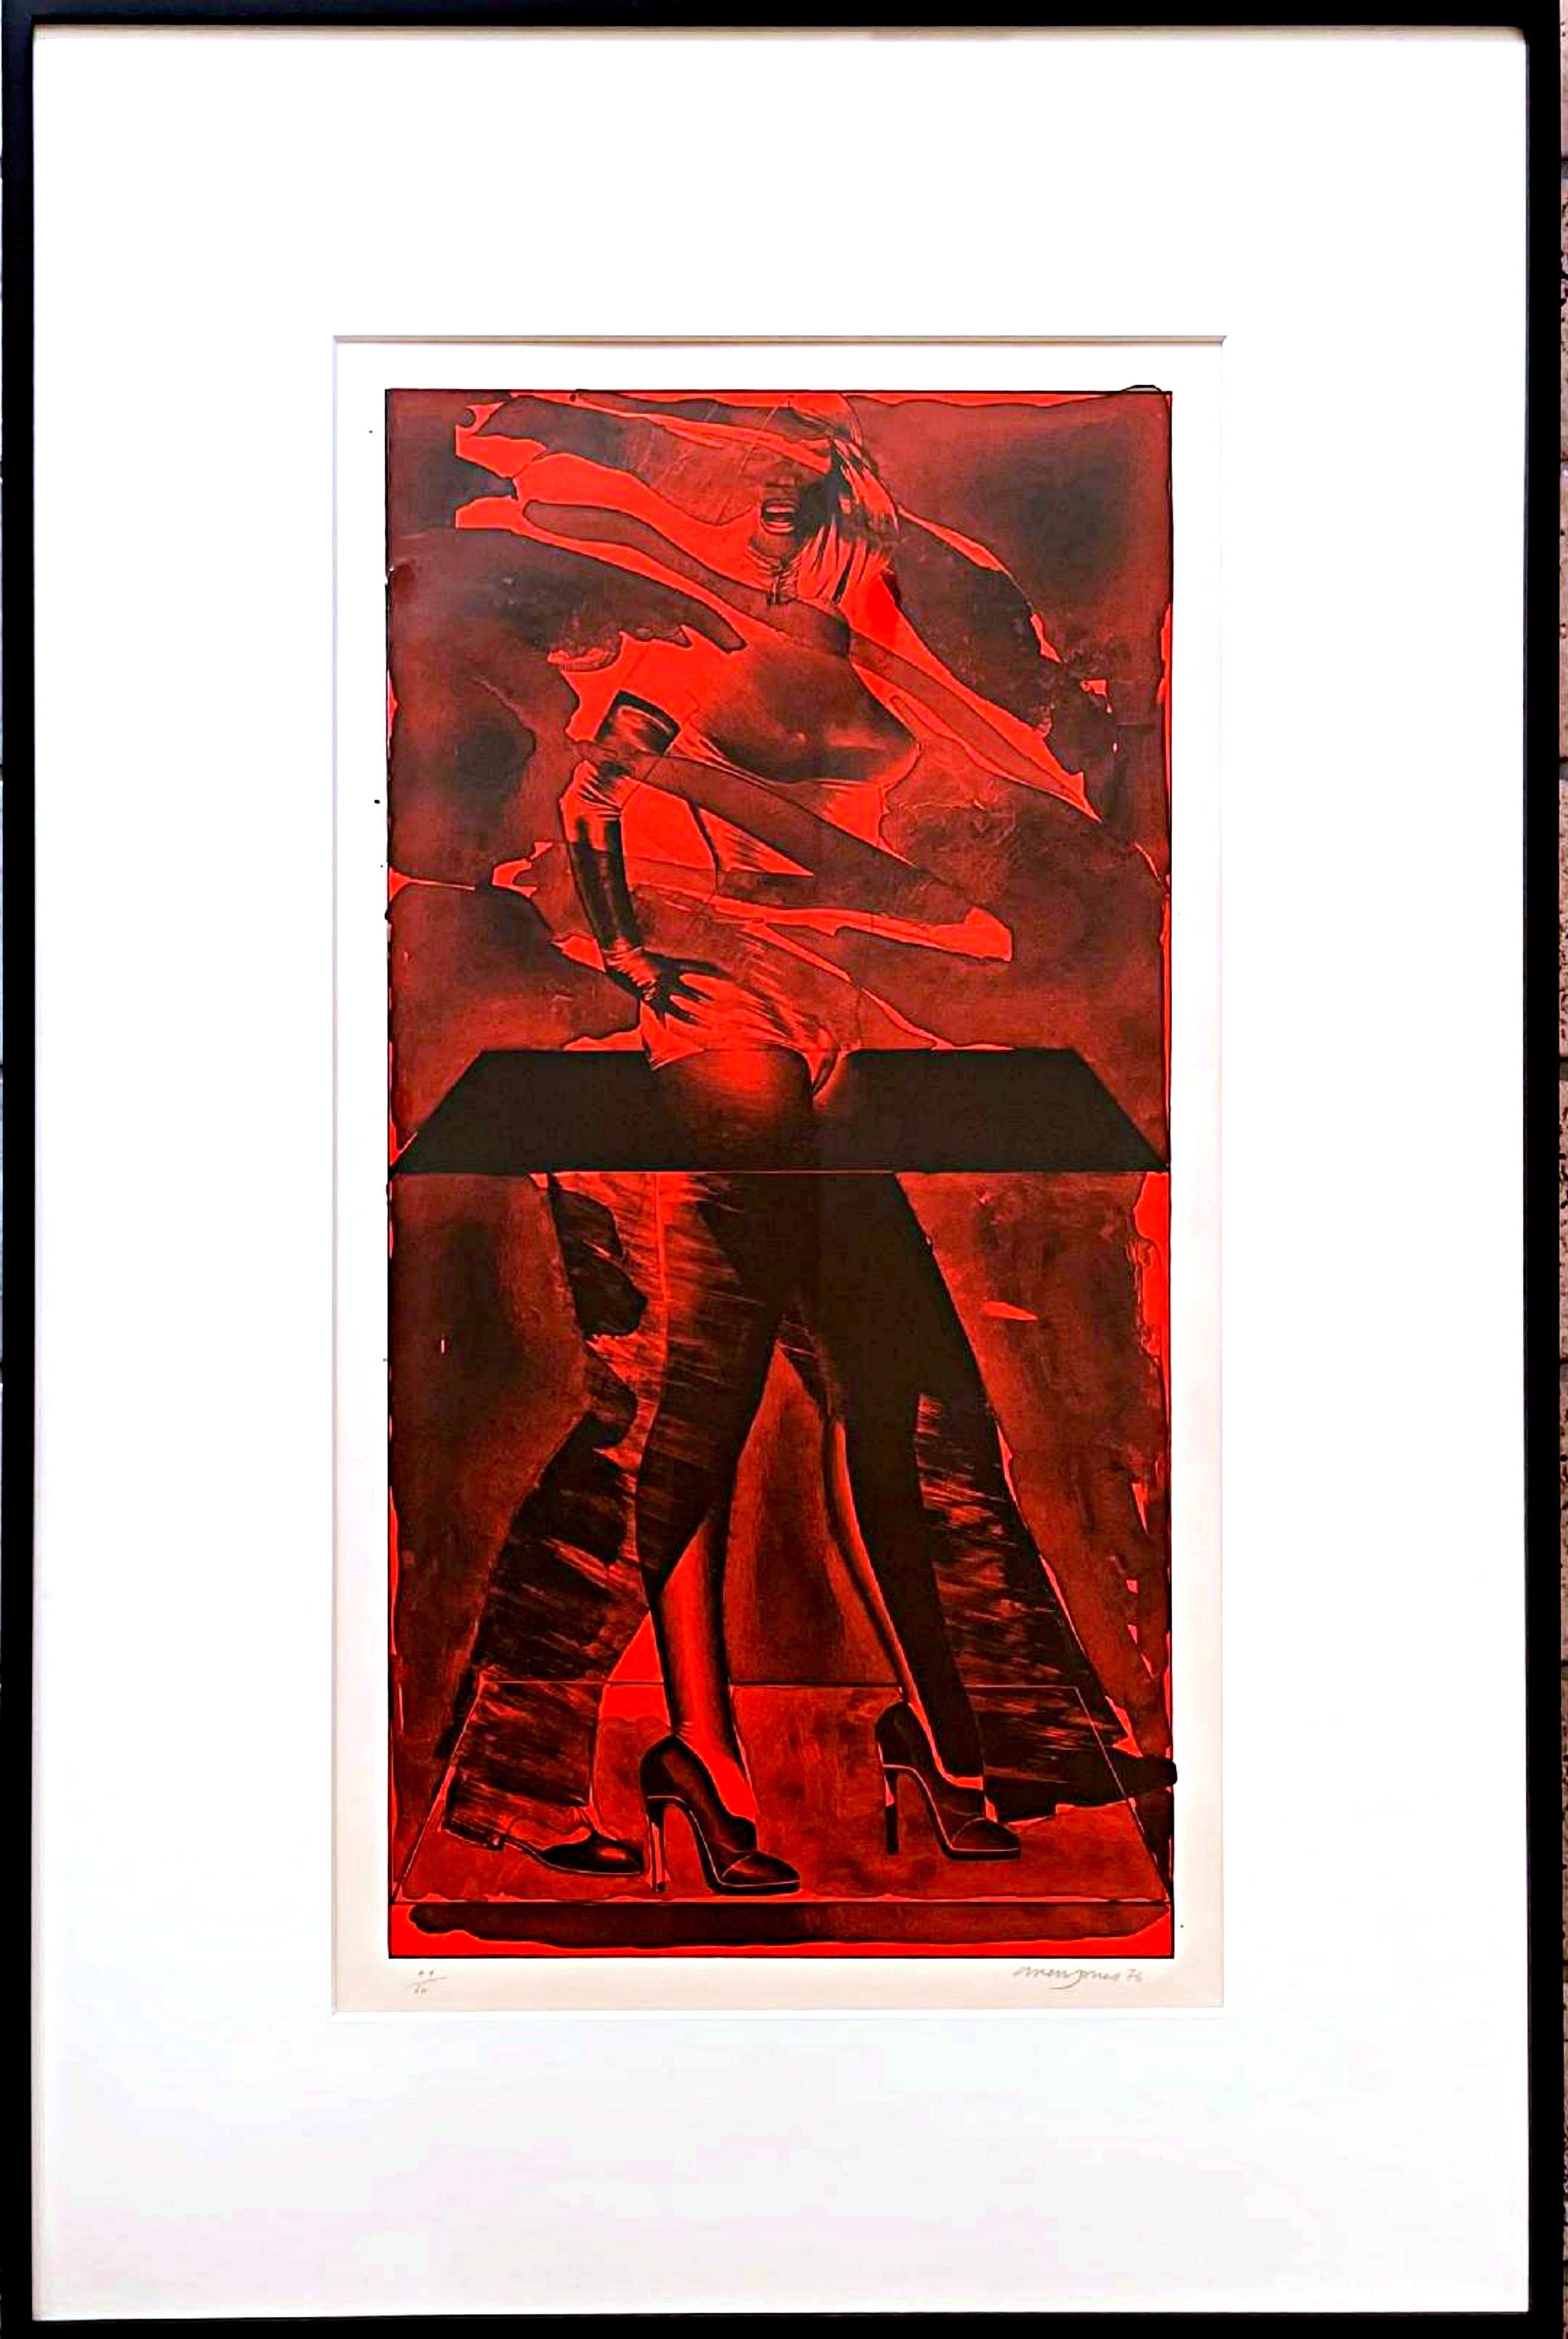 Allen Jones Abstract Print - Red Feat (Lloyd, 73) Dramatic Lt Ed silkscreen by pioneering British Pop Artist